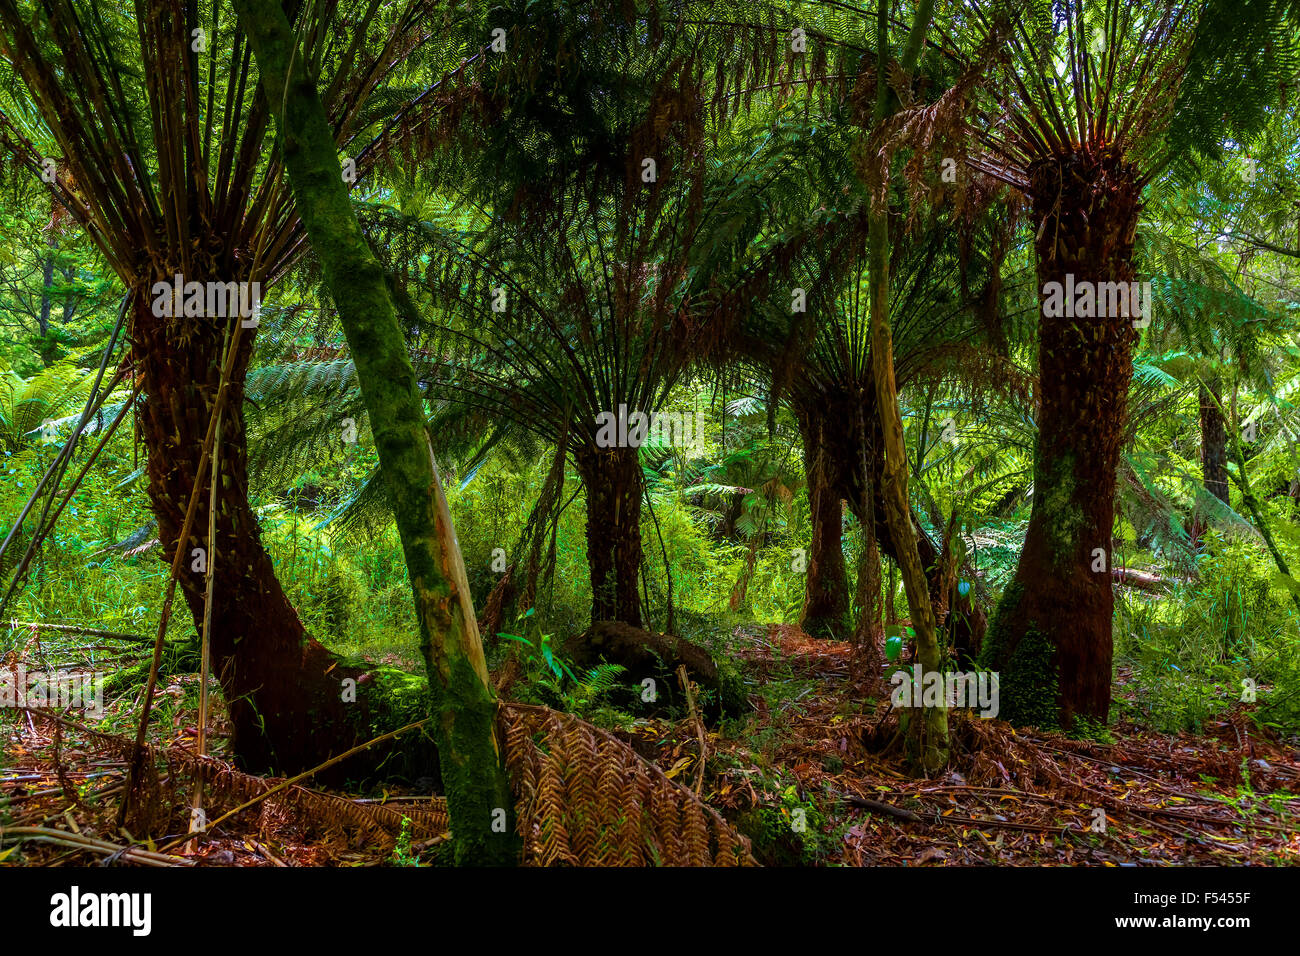 Tree Ferns in the Dandenong Ranges, Victoria, Australia. Stock Photo